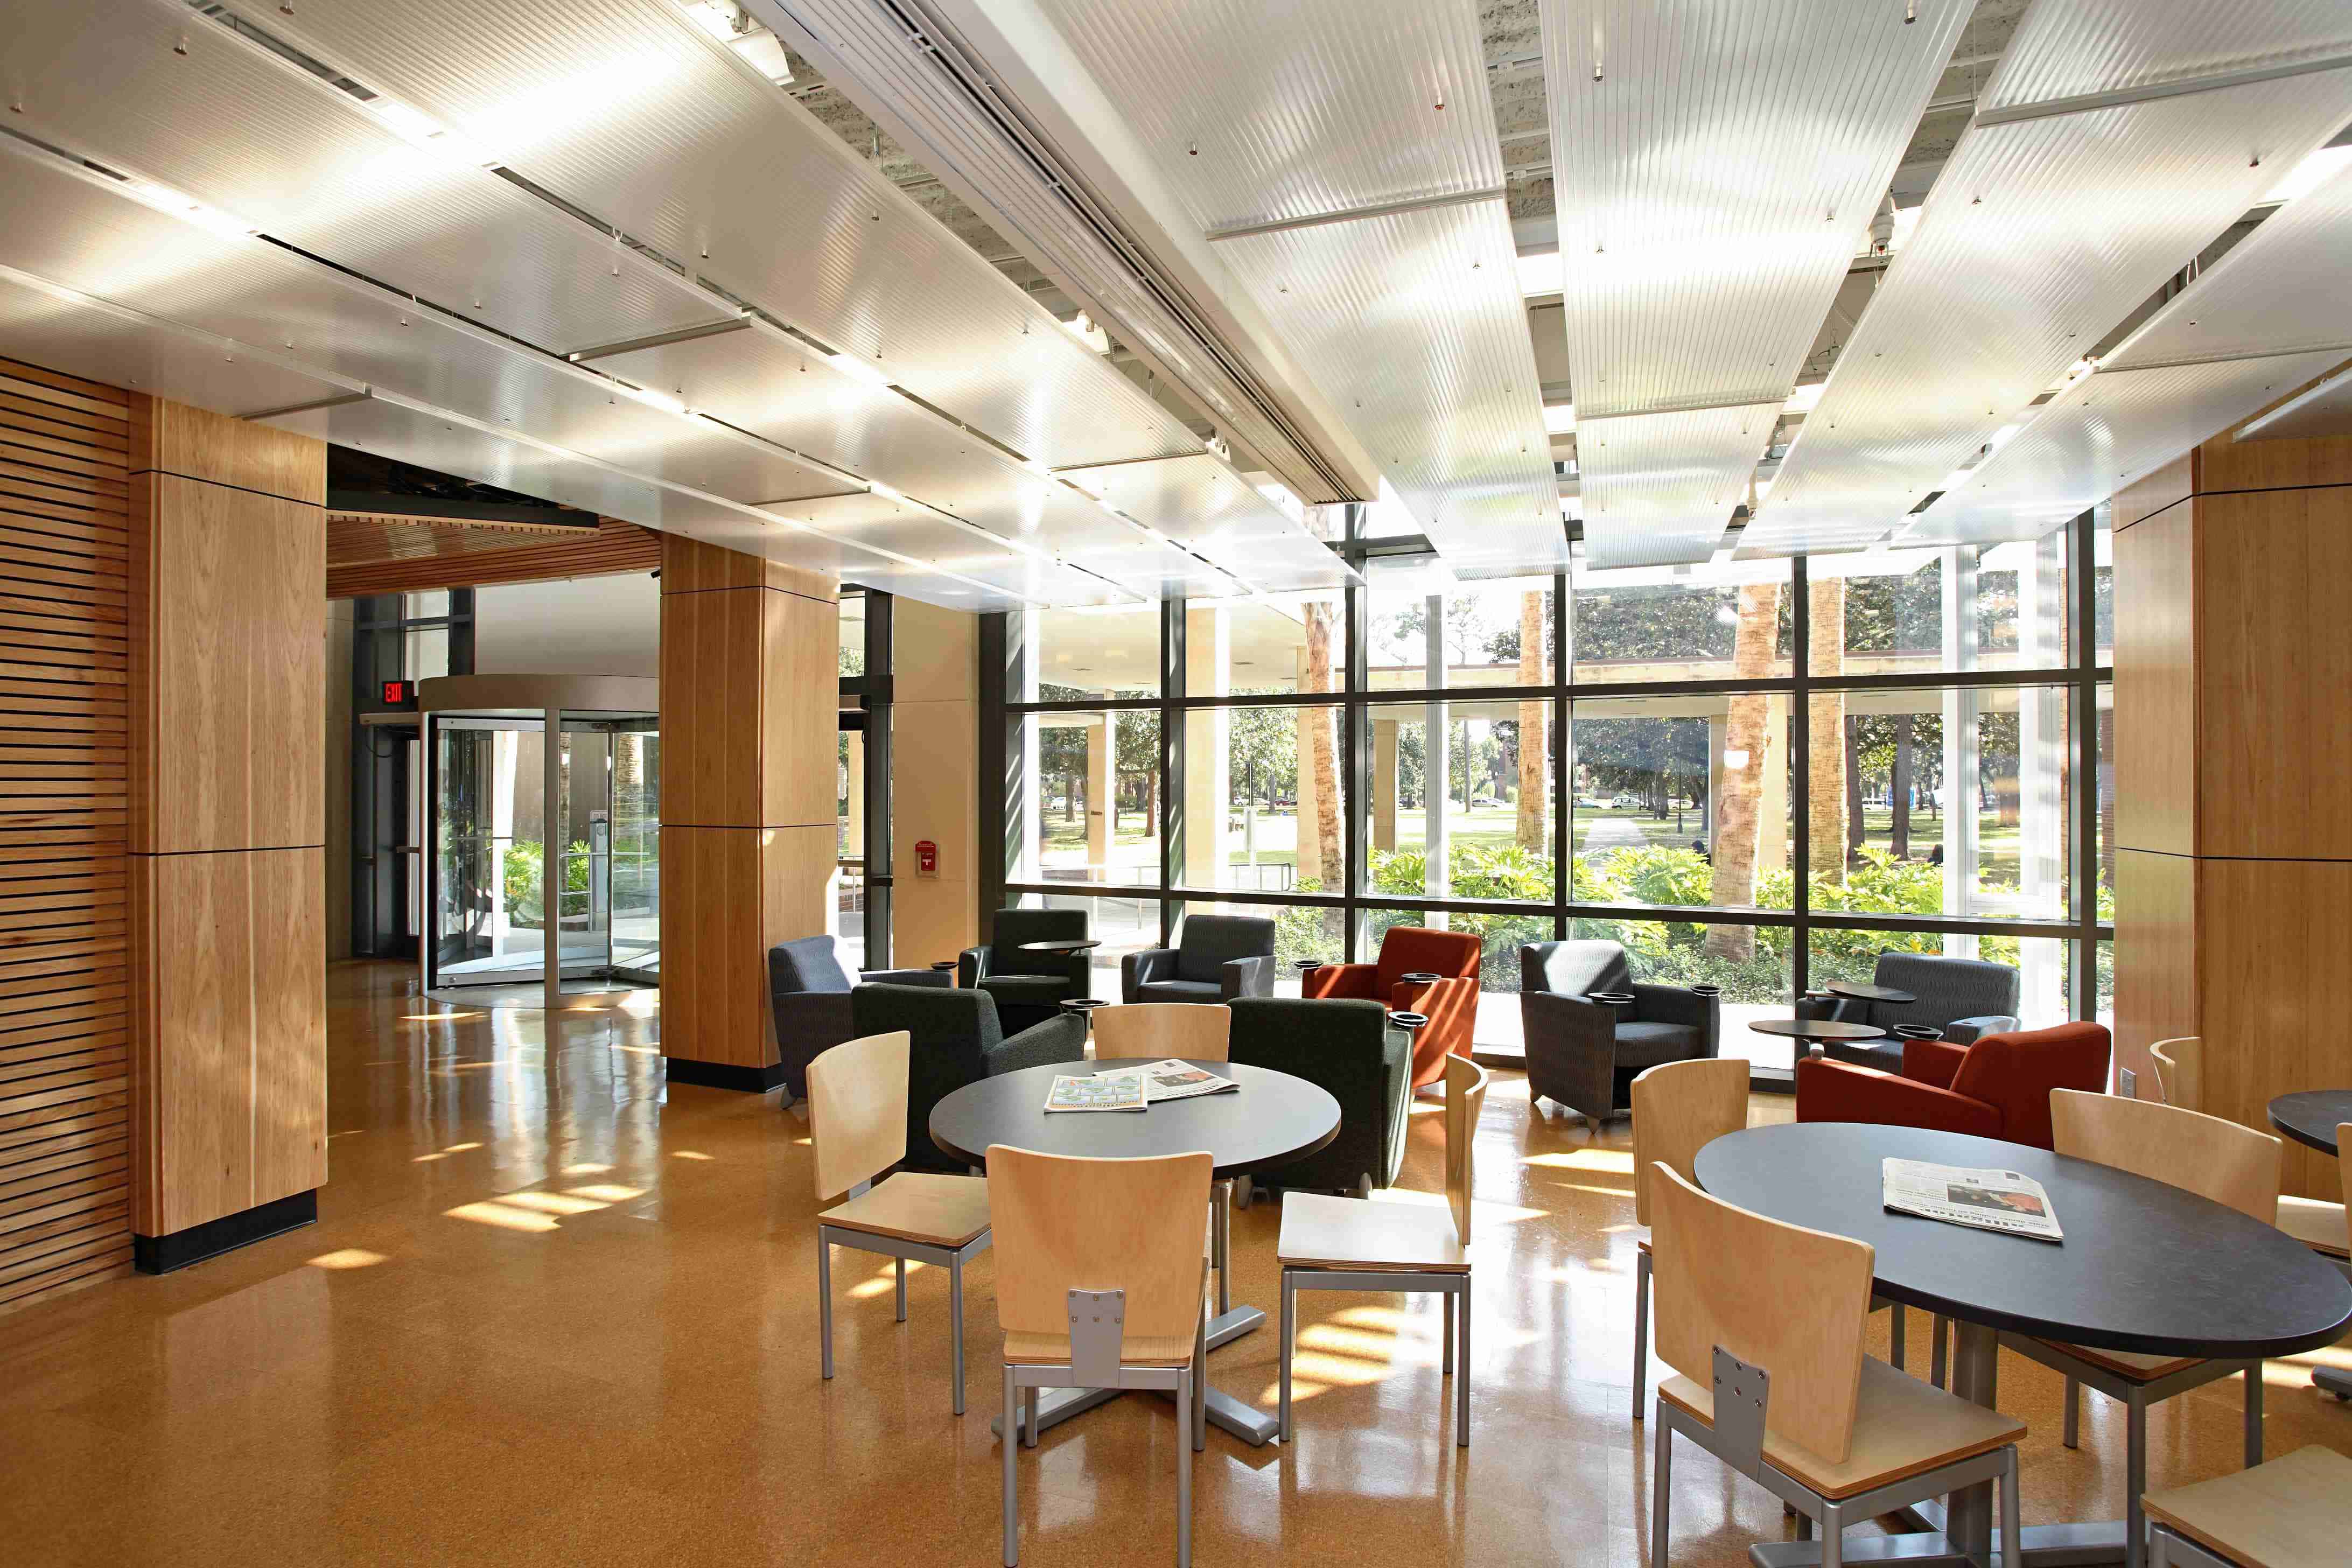 translucent polycarbonate ceiling panels - EXTECH's FLEXI-PANEL for the University of Florida